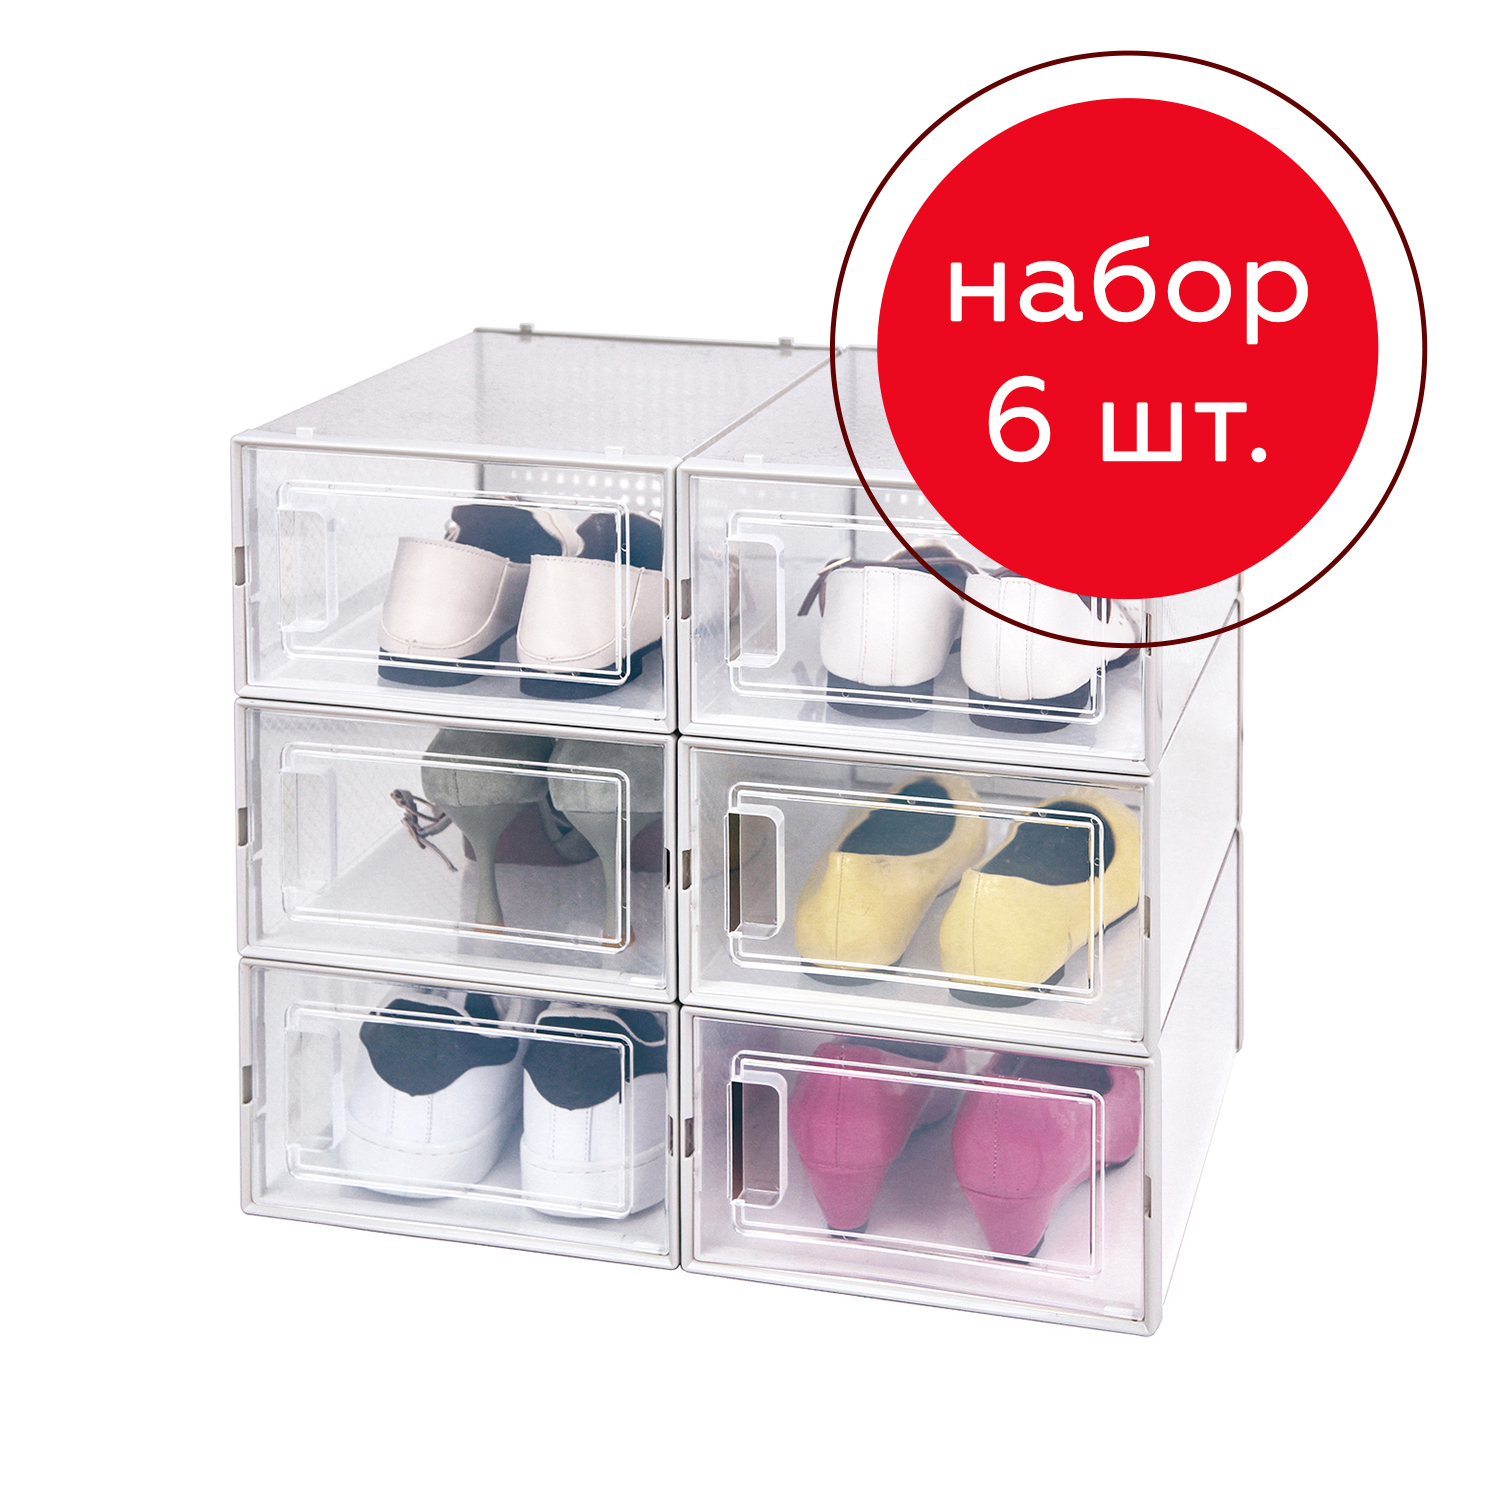 Коробка Homsu для хранения обуви Premium 6 шт - фото 2